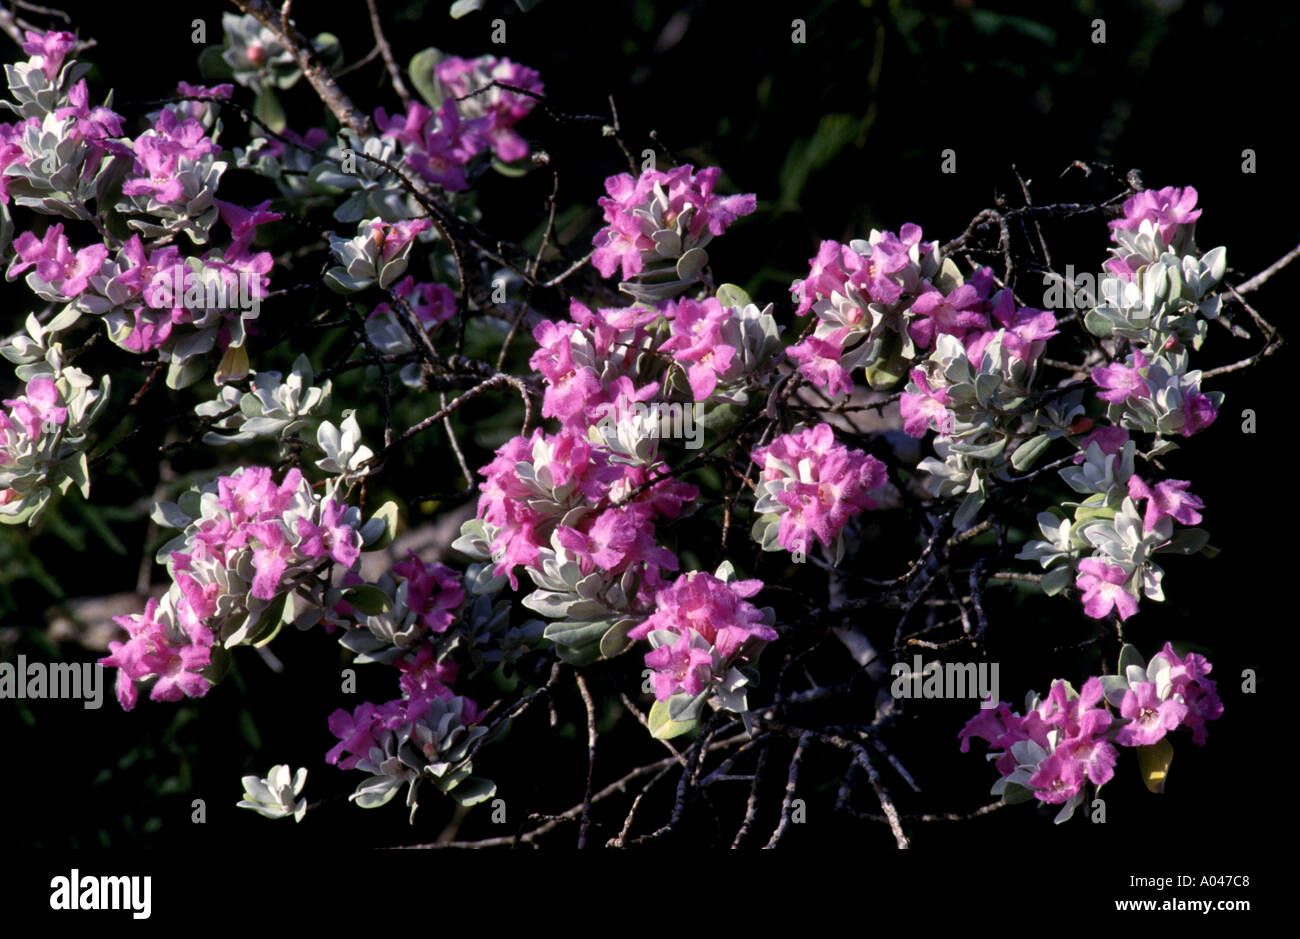 Cenizo Silverleaf Barometer bush Leucophyllum frutescens found in Live Oak County Texas Stock Photo